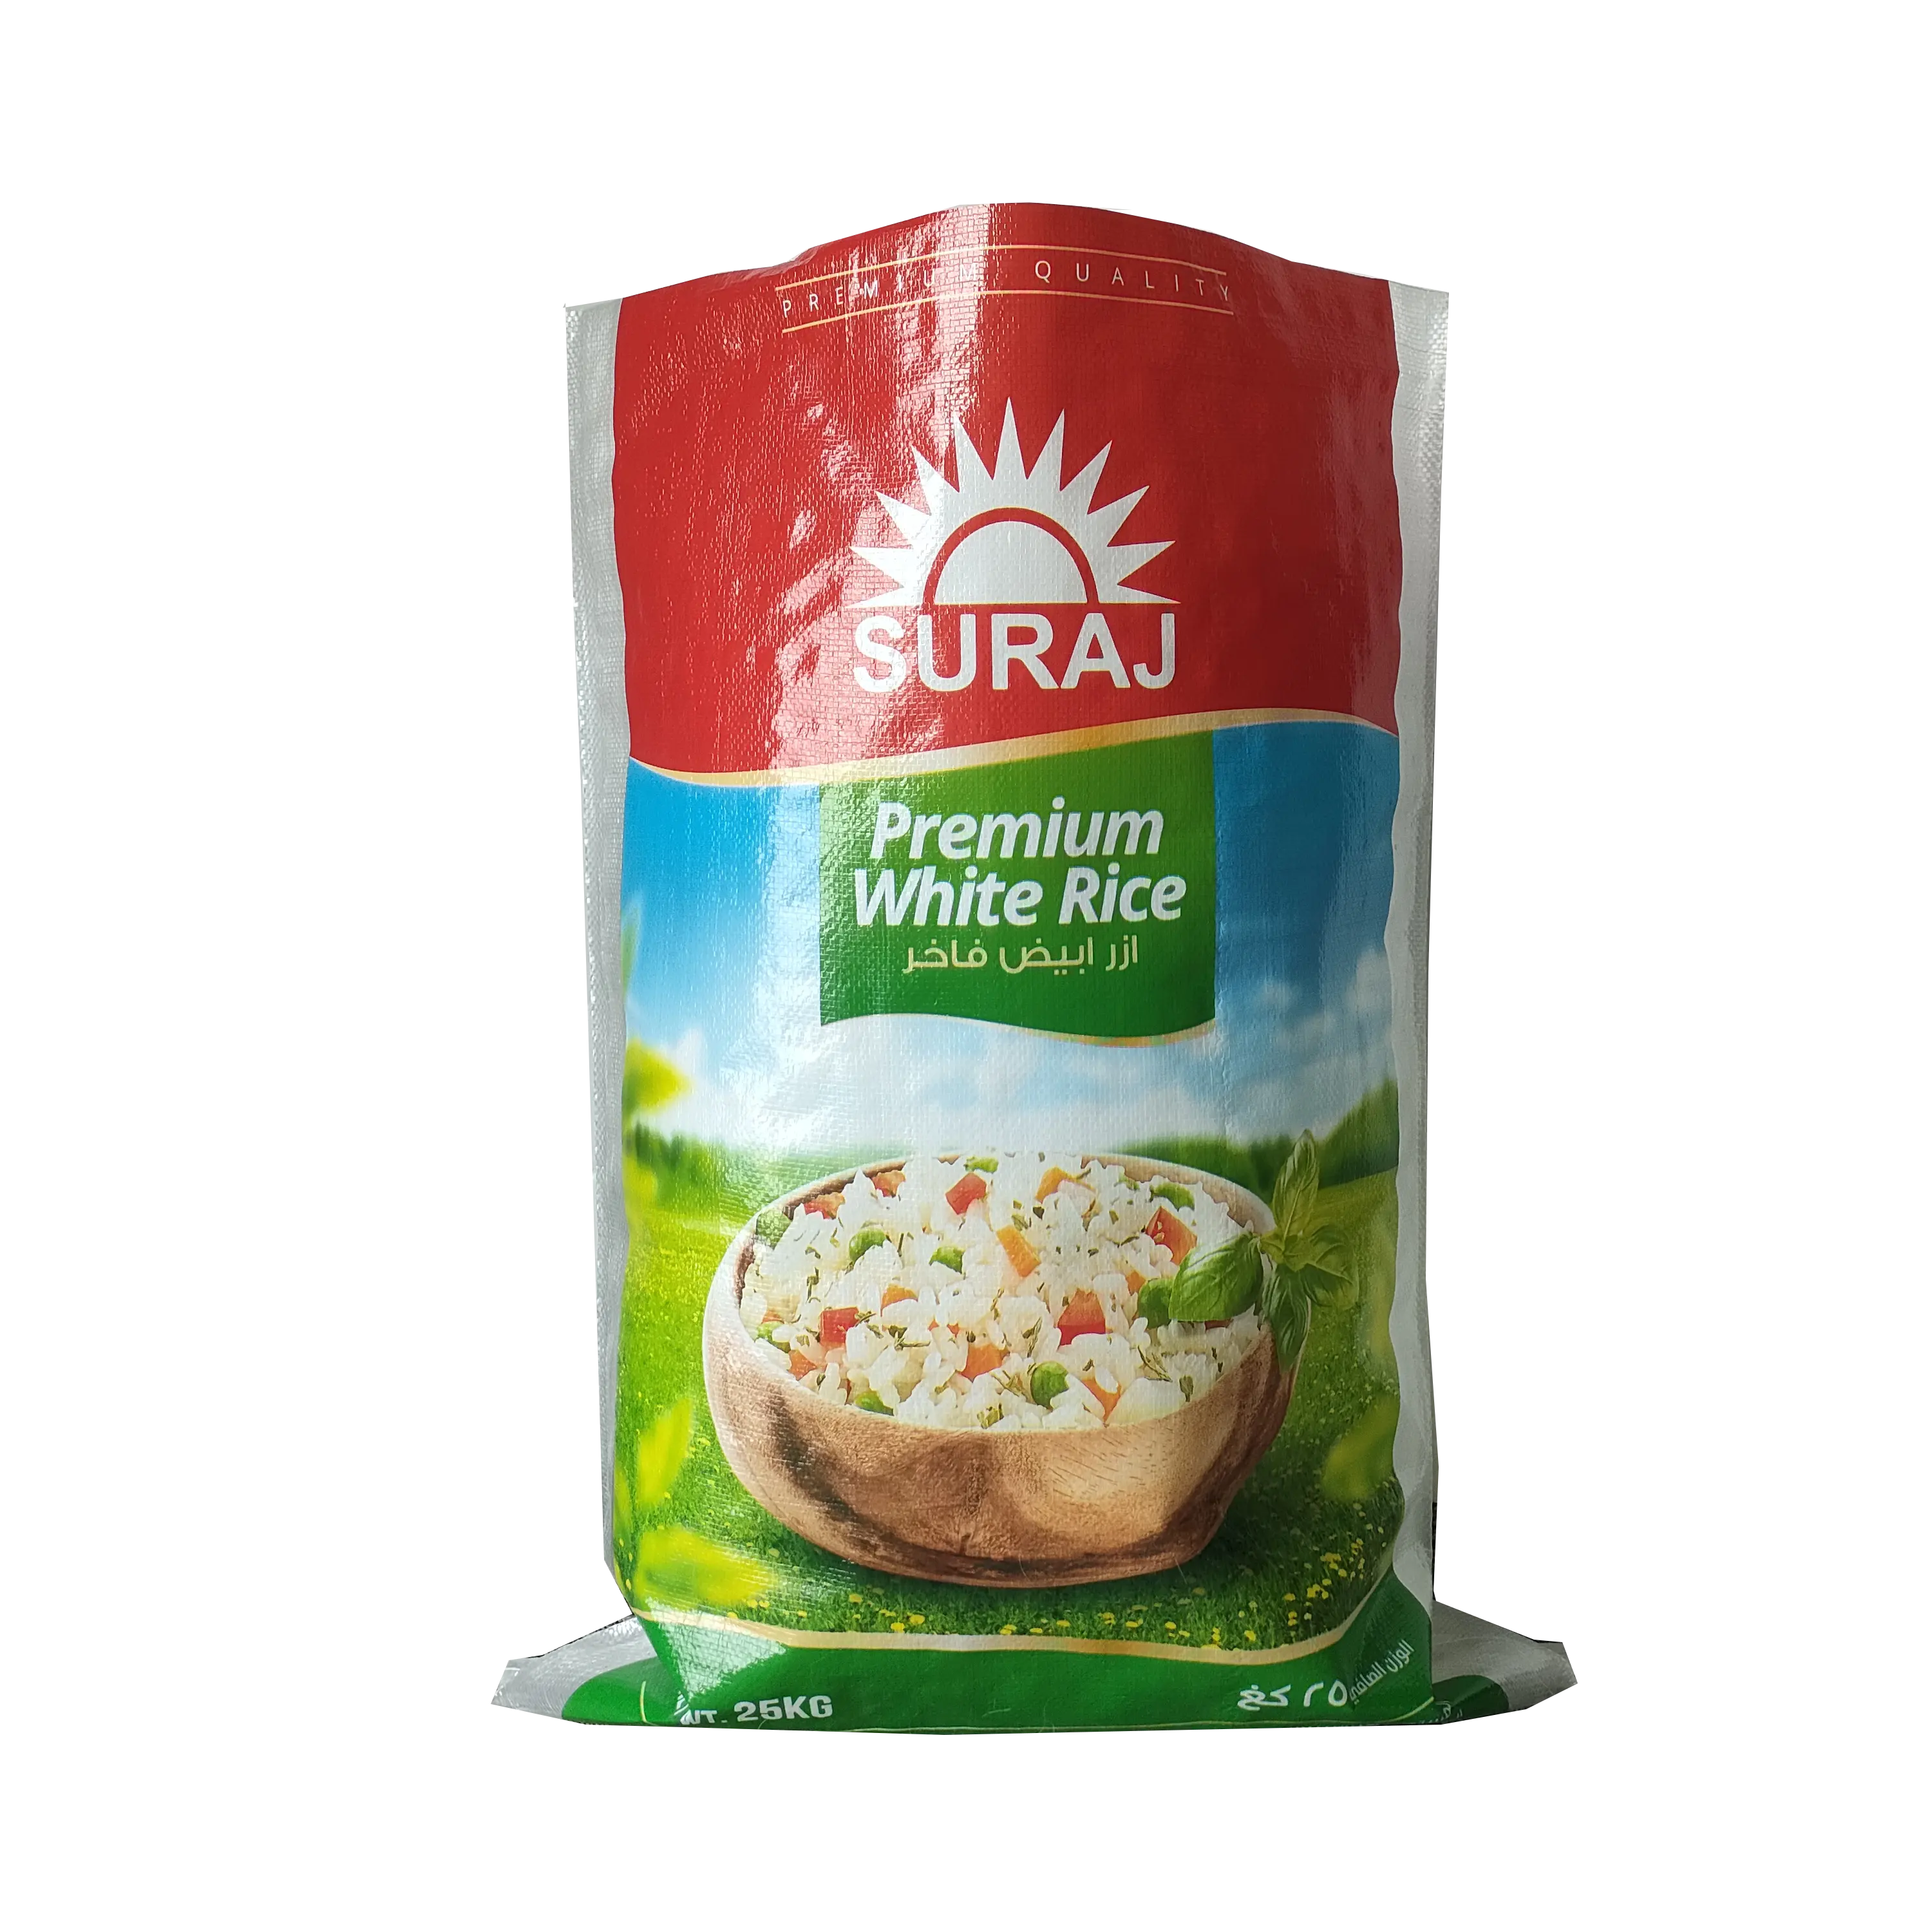 थोक कस्टम खाली 5 किलो 10 किलो बोप लेमिनेटेड पीपी चावल मकई बुना पैकिंग बोरी बैग 100 किलो 50 किलो 25 किलो 5 किलो पैकेजिंग बिक्री के लिए